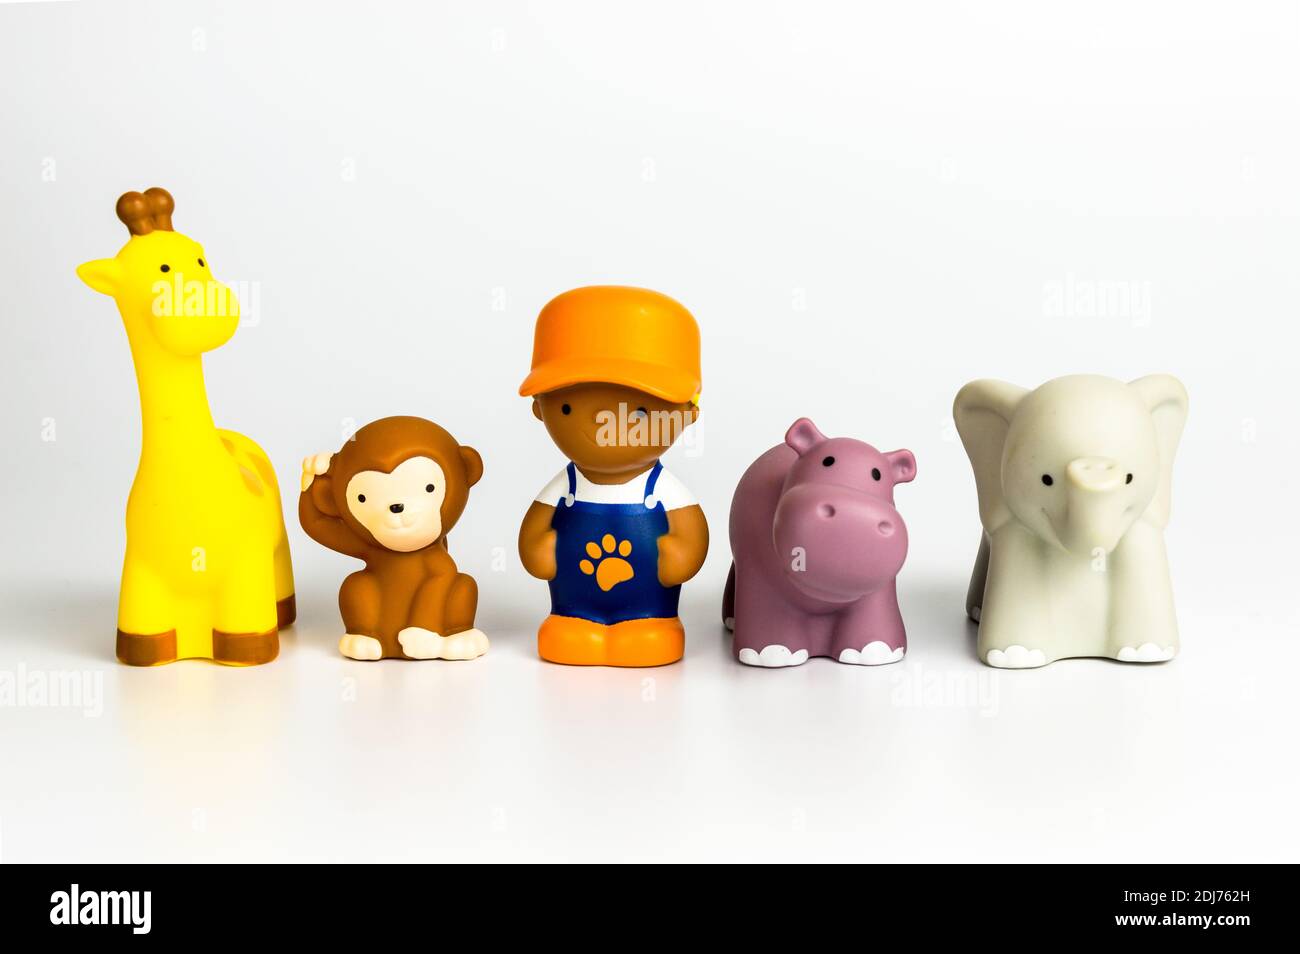 Wildlife animal toys with a human person on white background Stock Photo